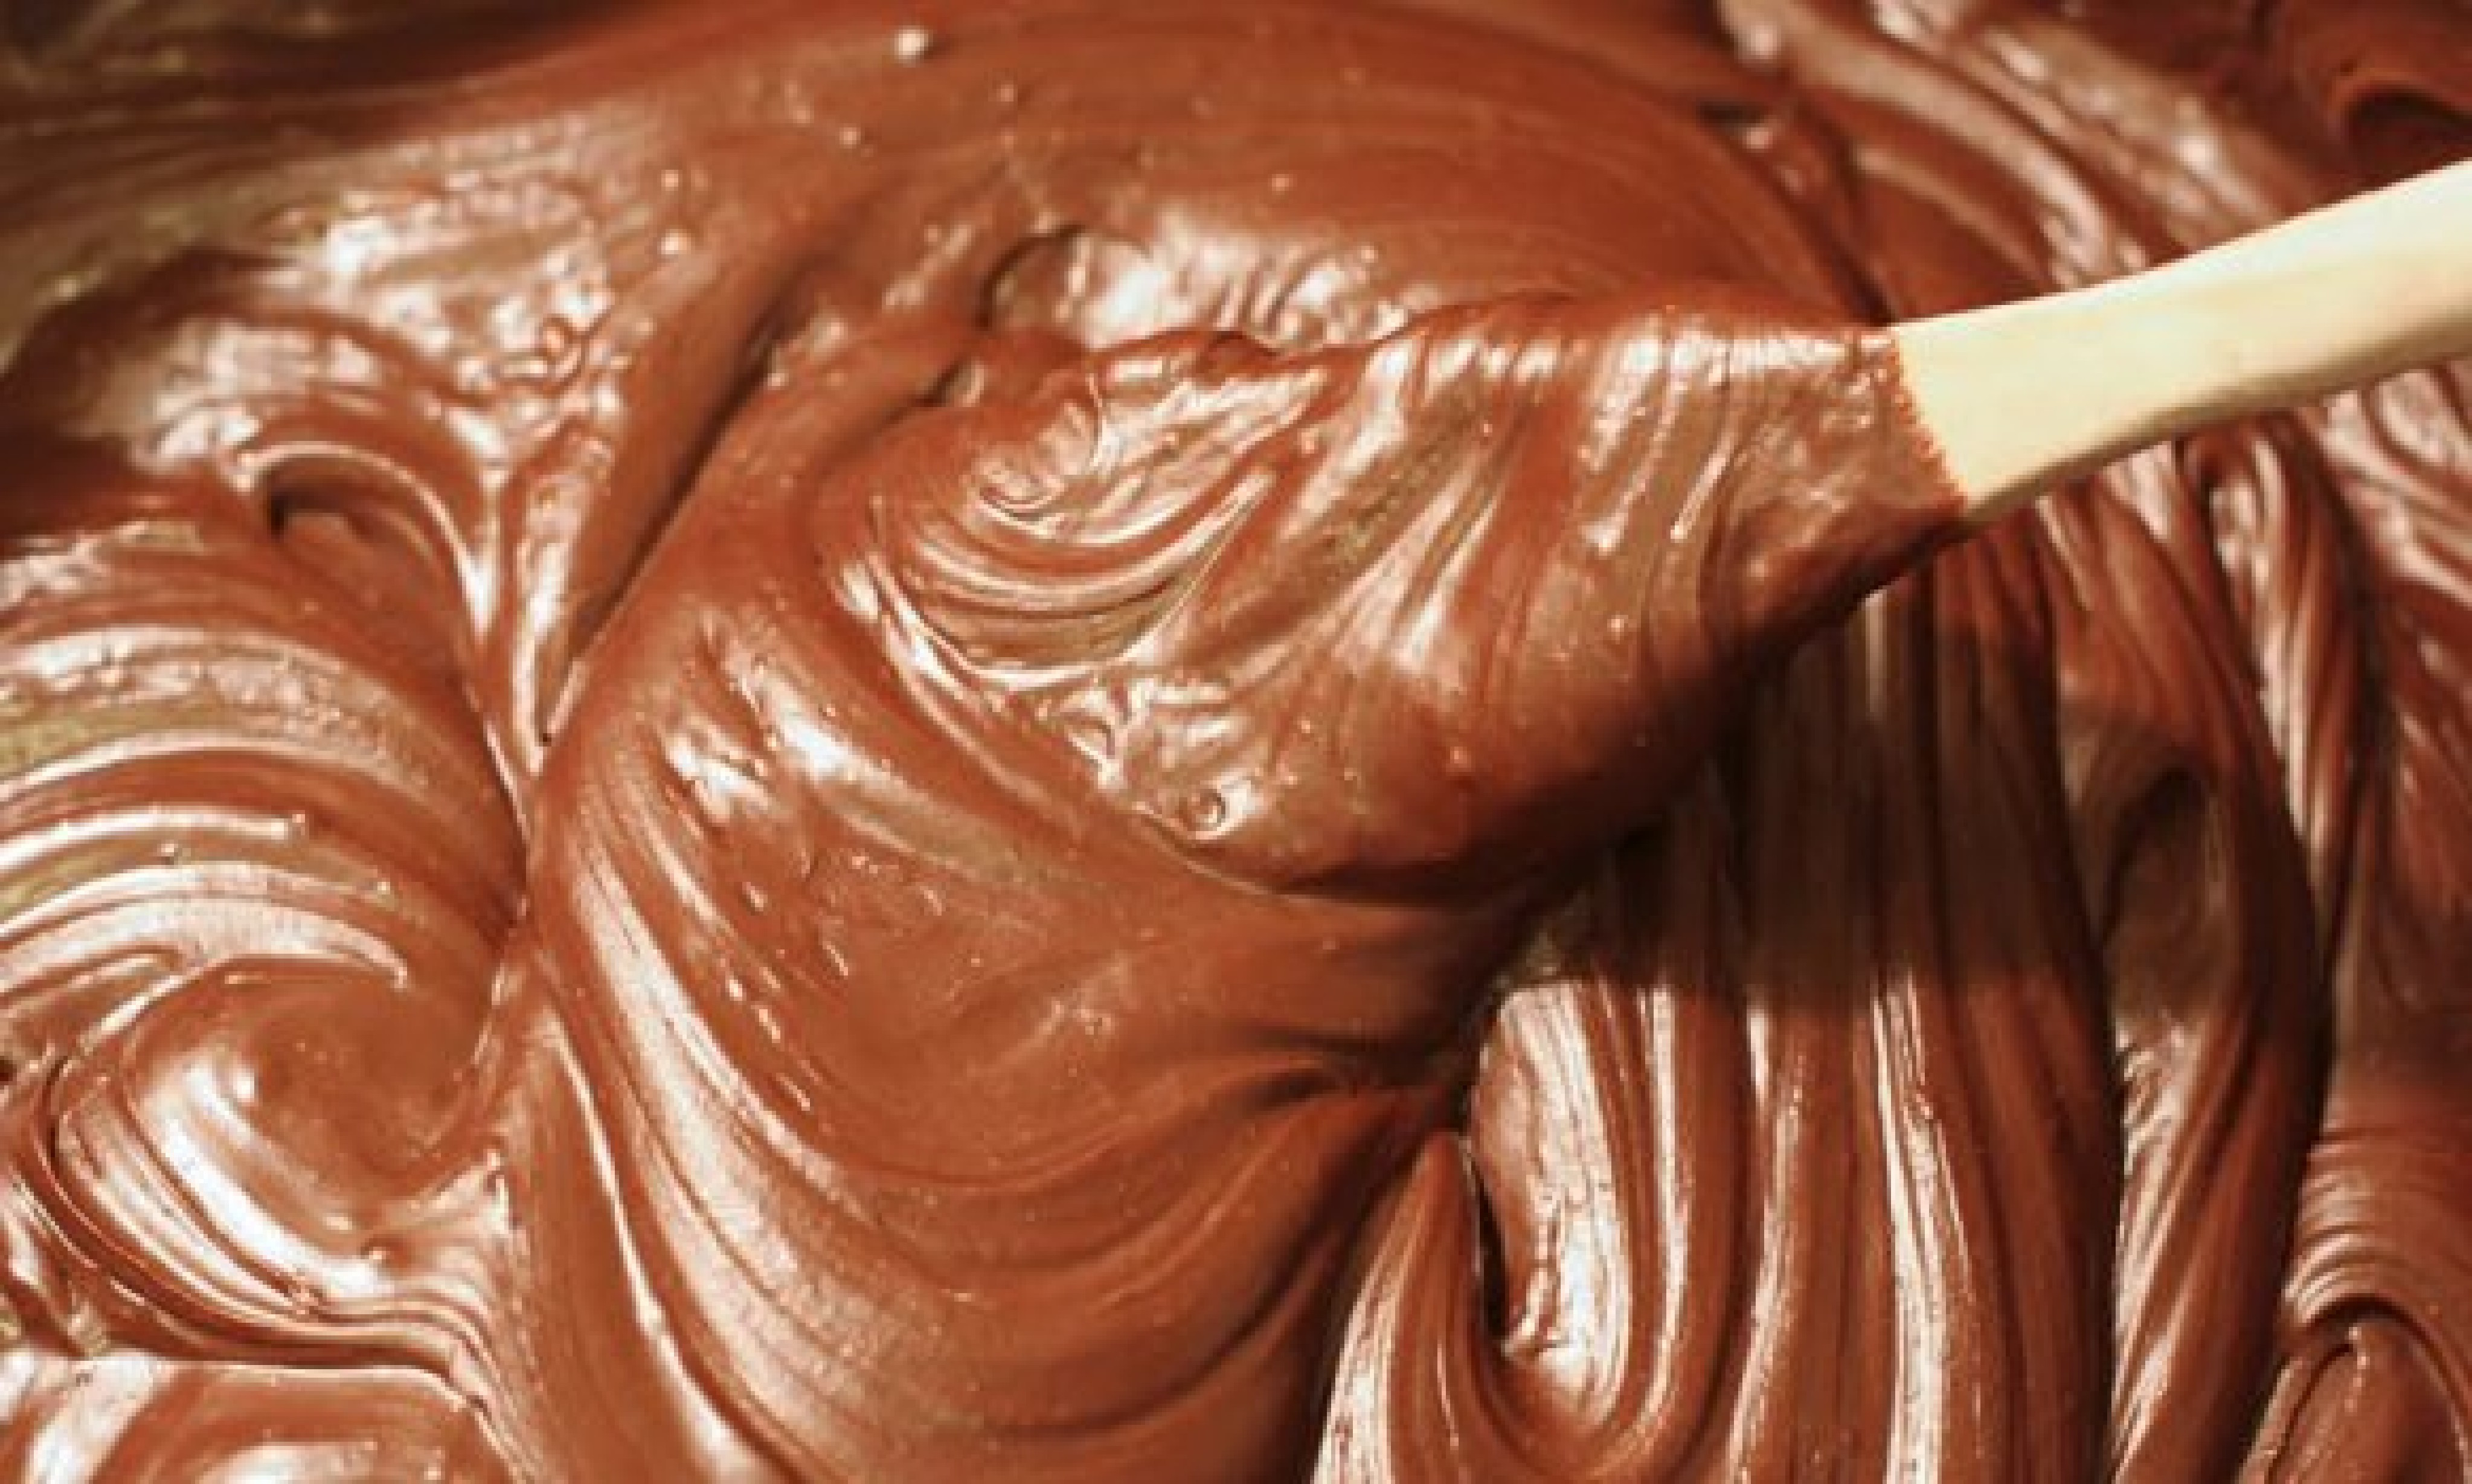 Cobertura cremosa de chocolate